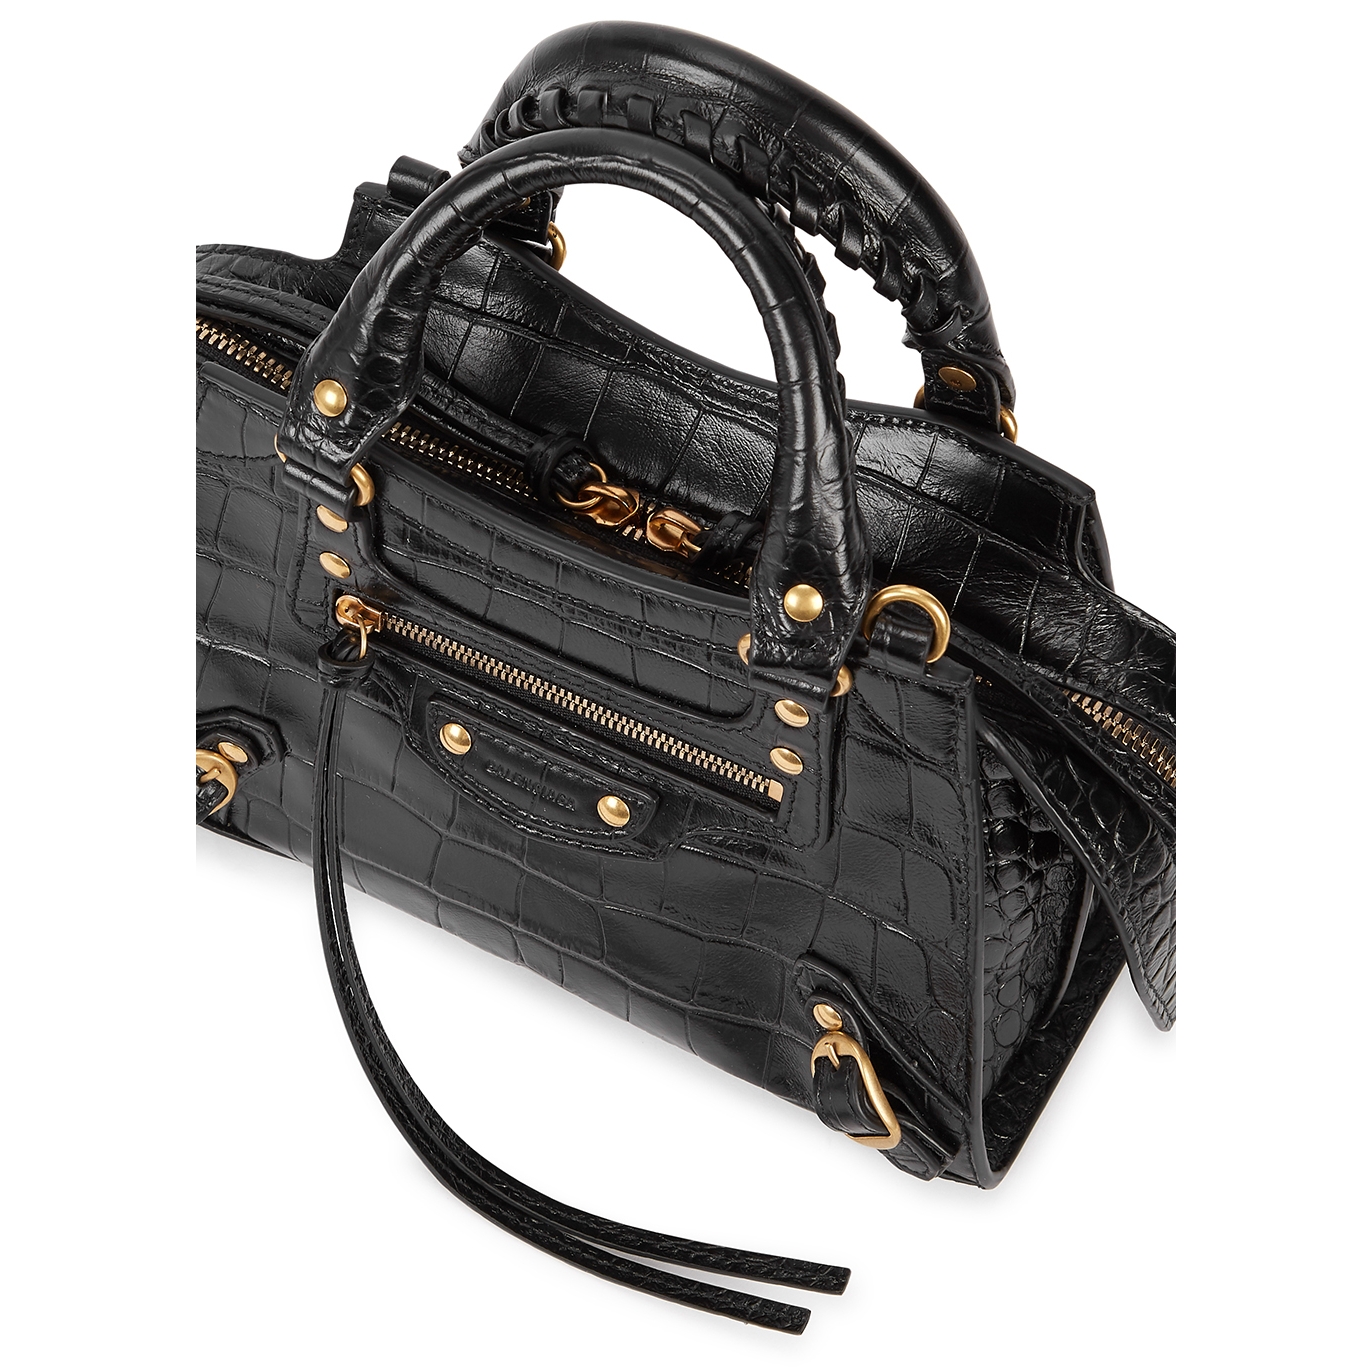 Balenciaga Classic City Mini Crocodile-effect Leather Bag in Black